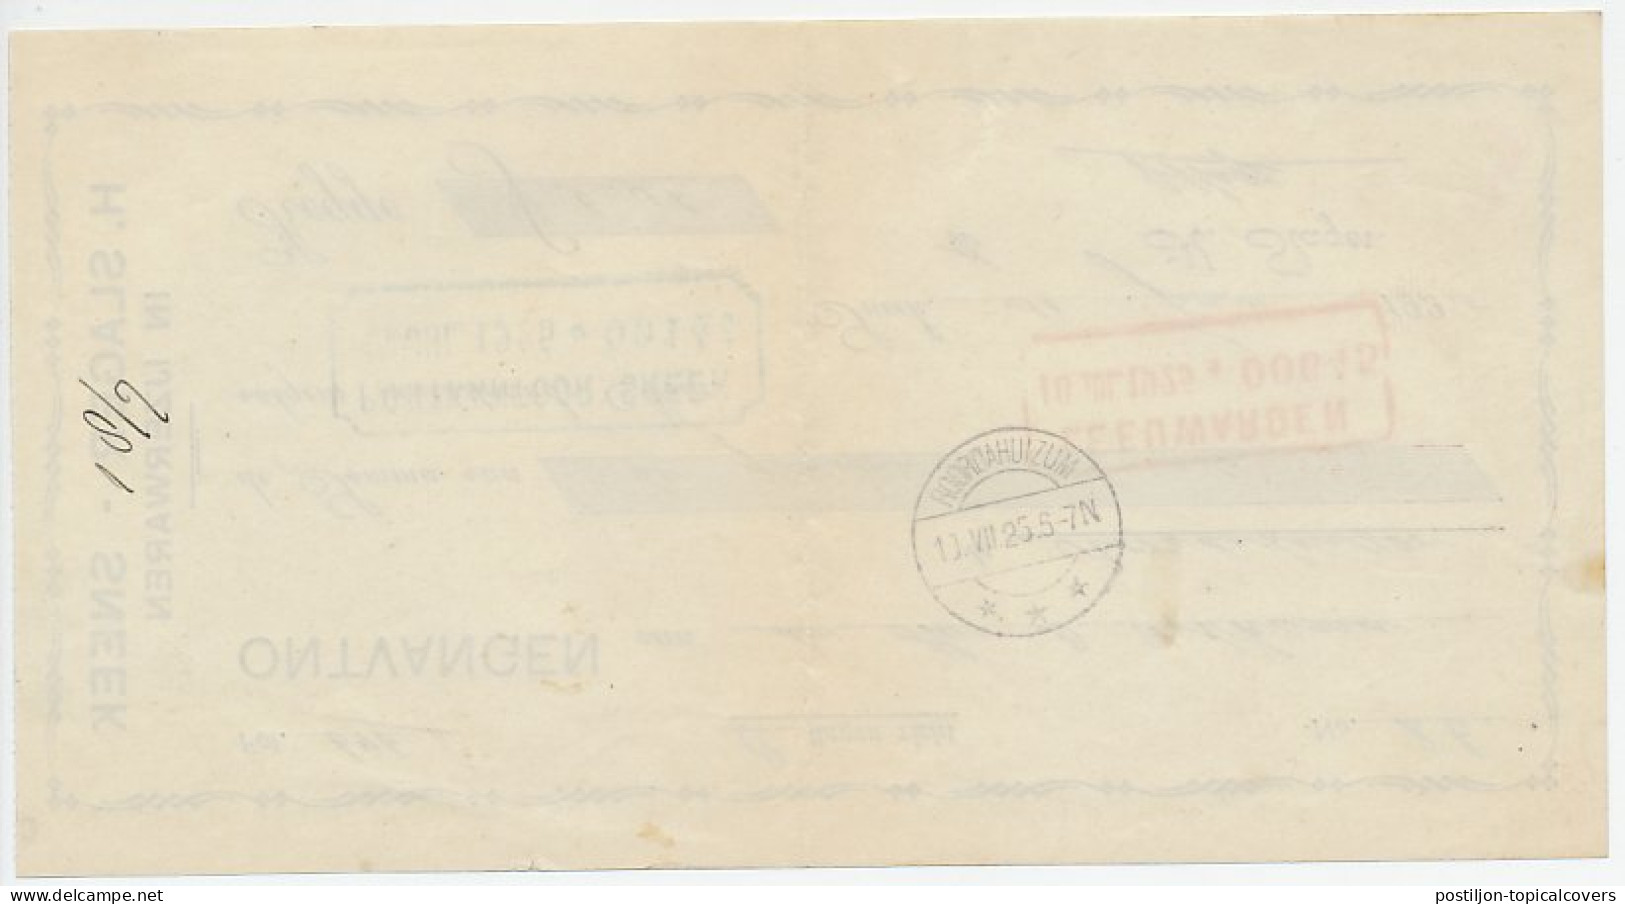 Sneek - Roordahuizum1925 - Begeleidingsbrief - Unclassified